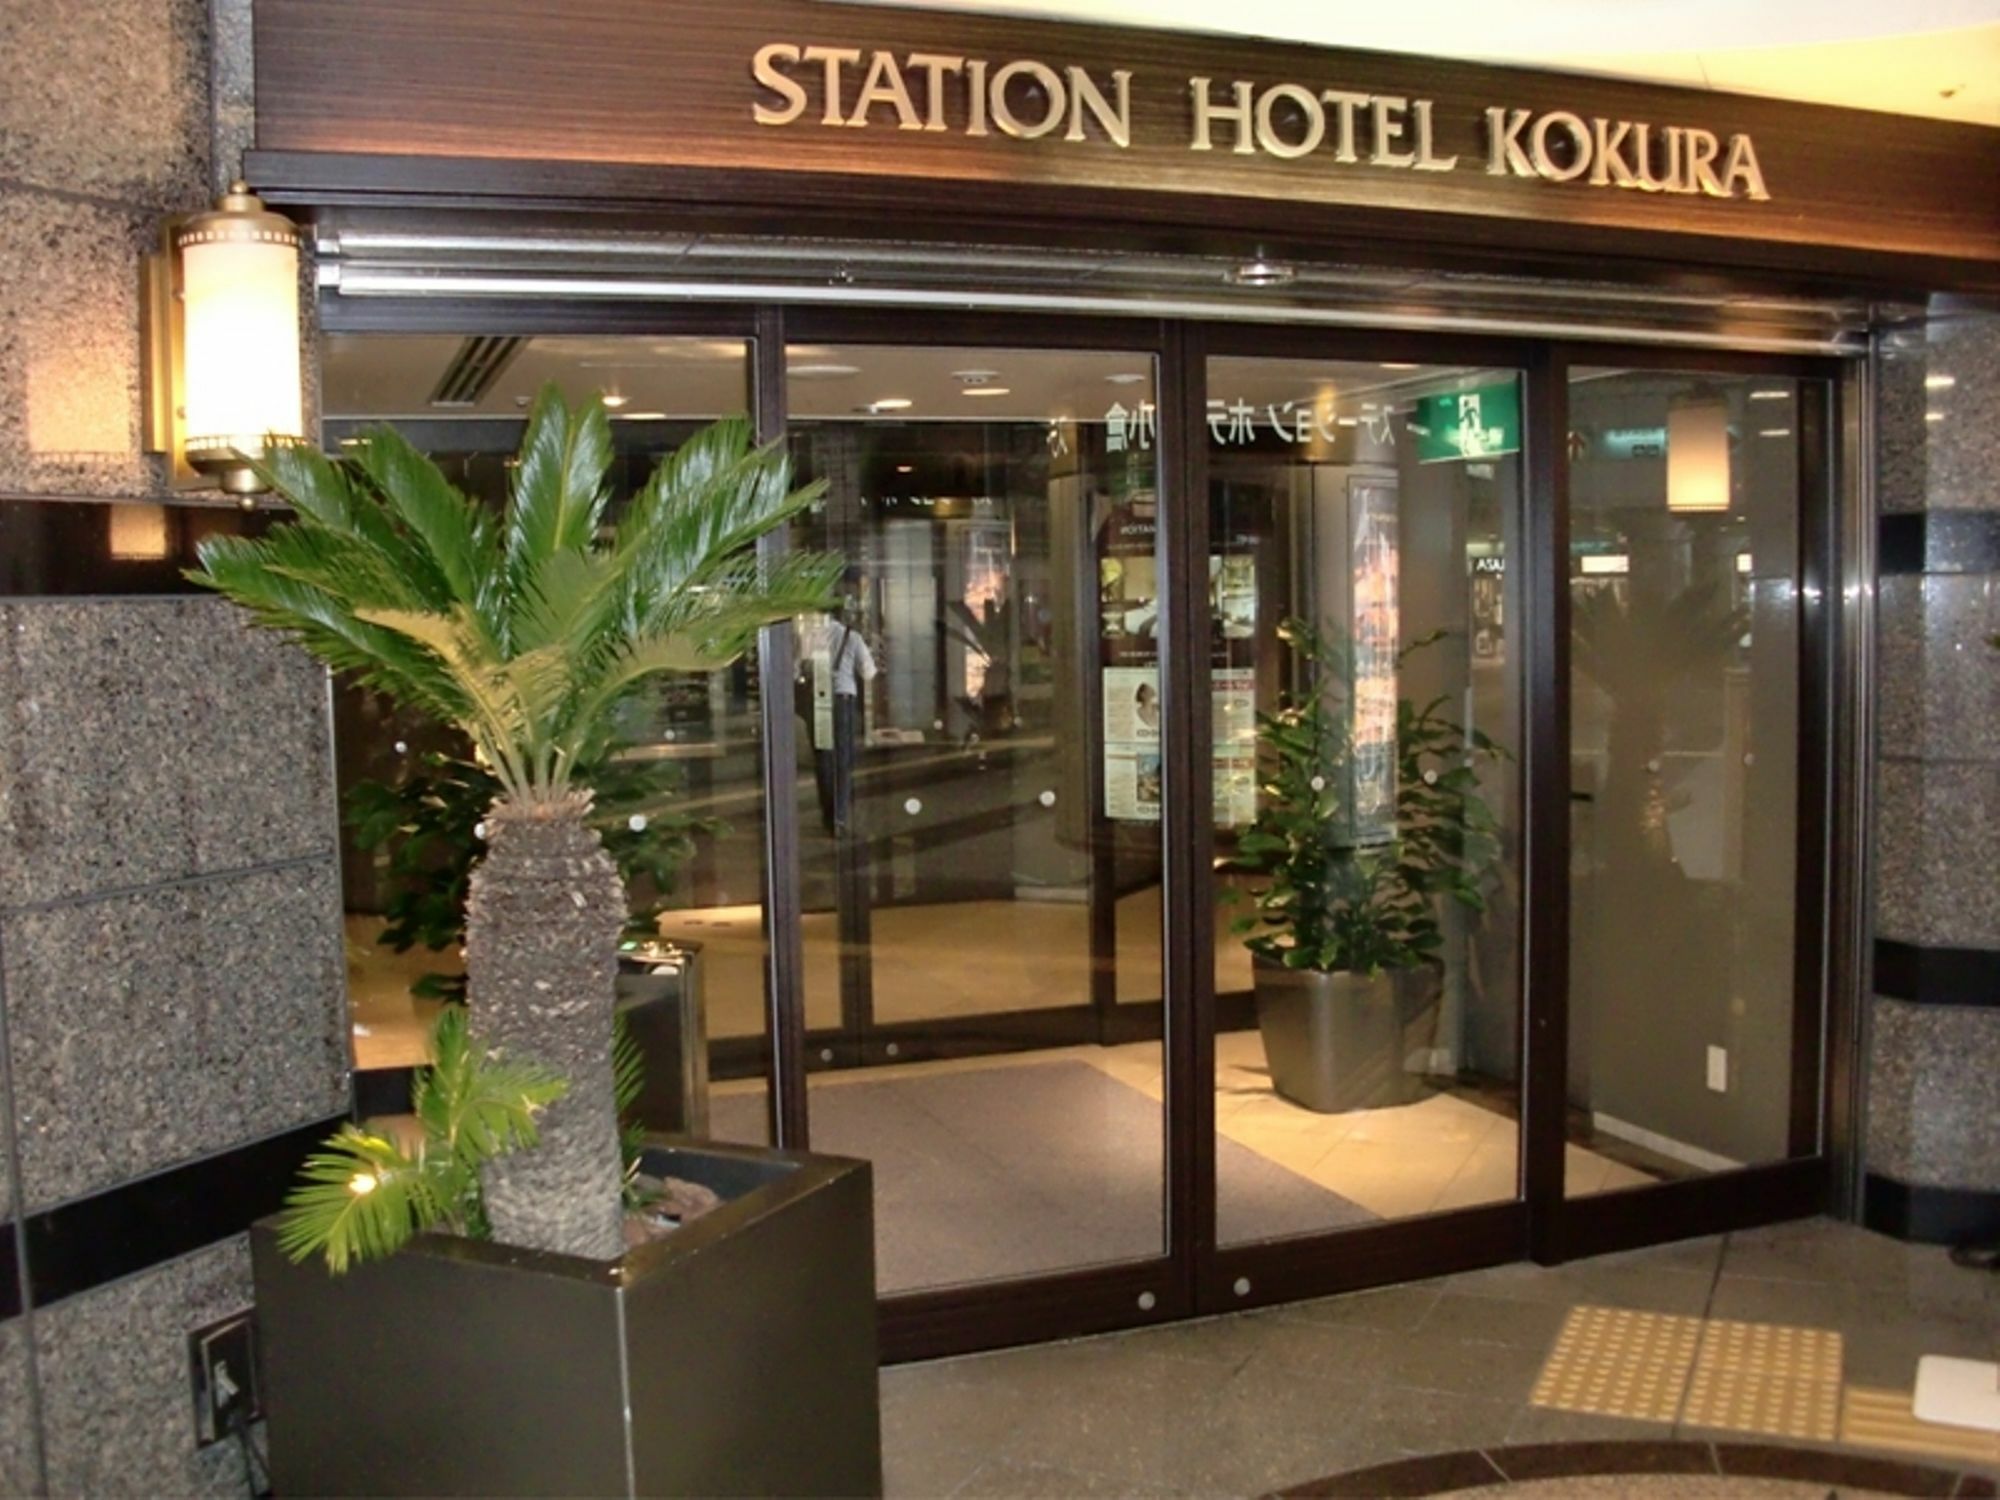 Jr Kyushu Station Hotel Kokura คิตะคิวชู ภายนอก รูปภาพ